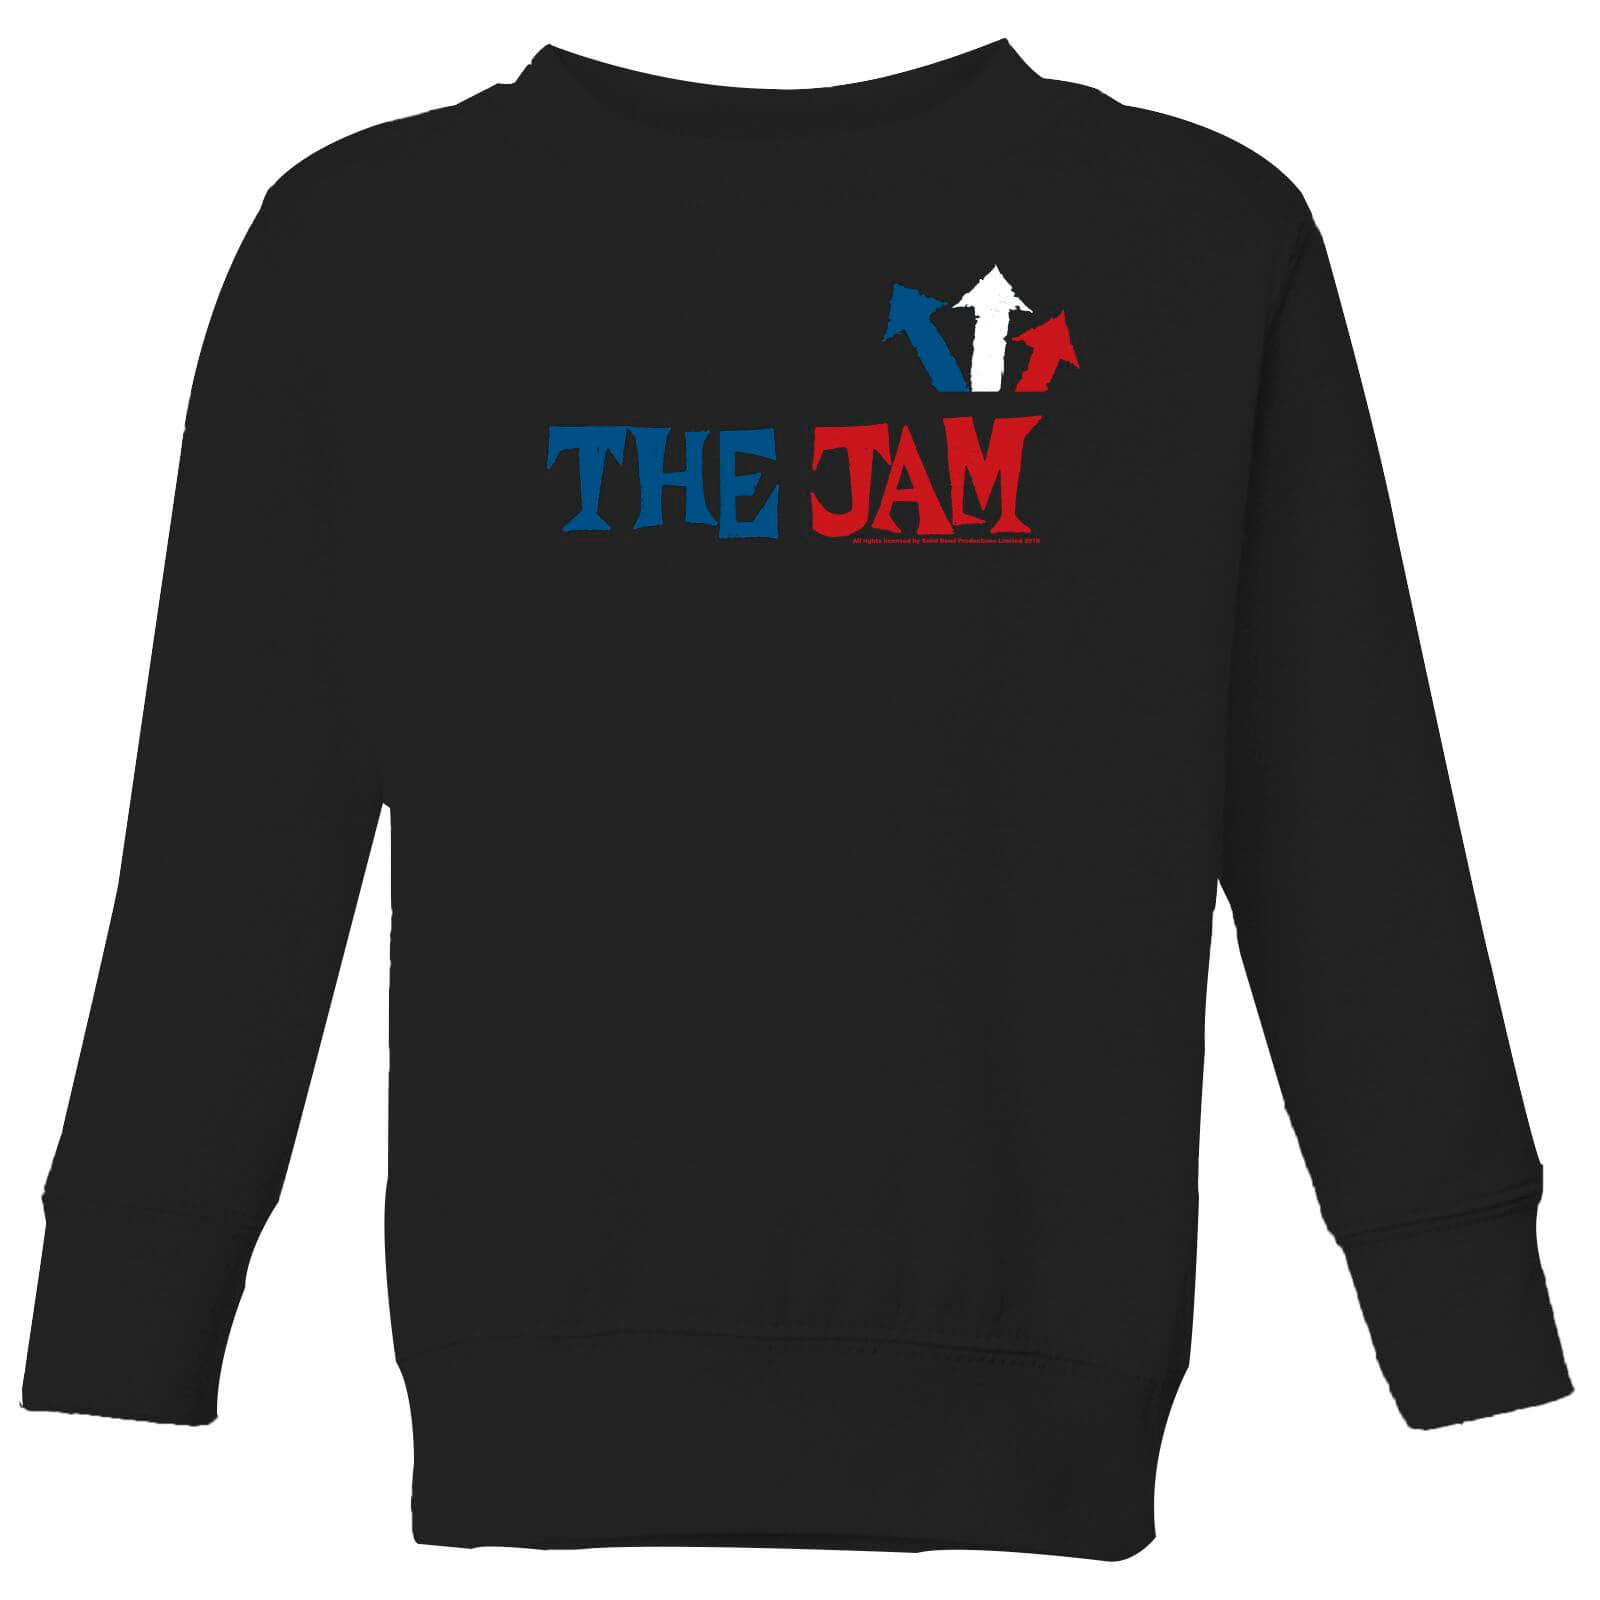 The Jam Text Logo Kids' Sweatshirt - Black - 3-4 Years - Black